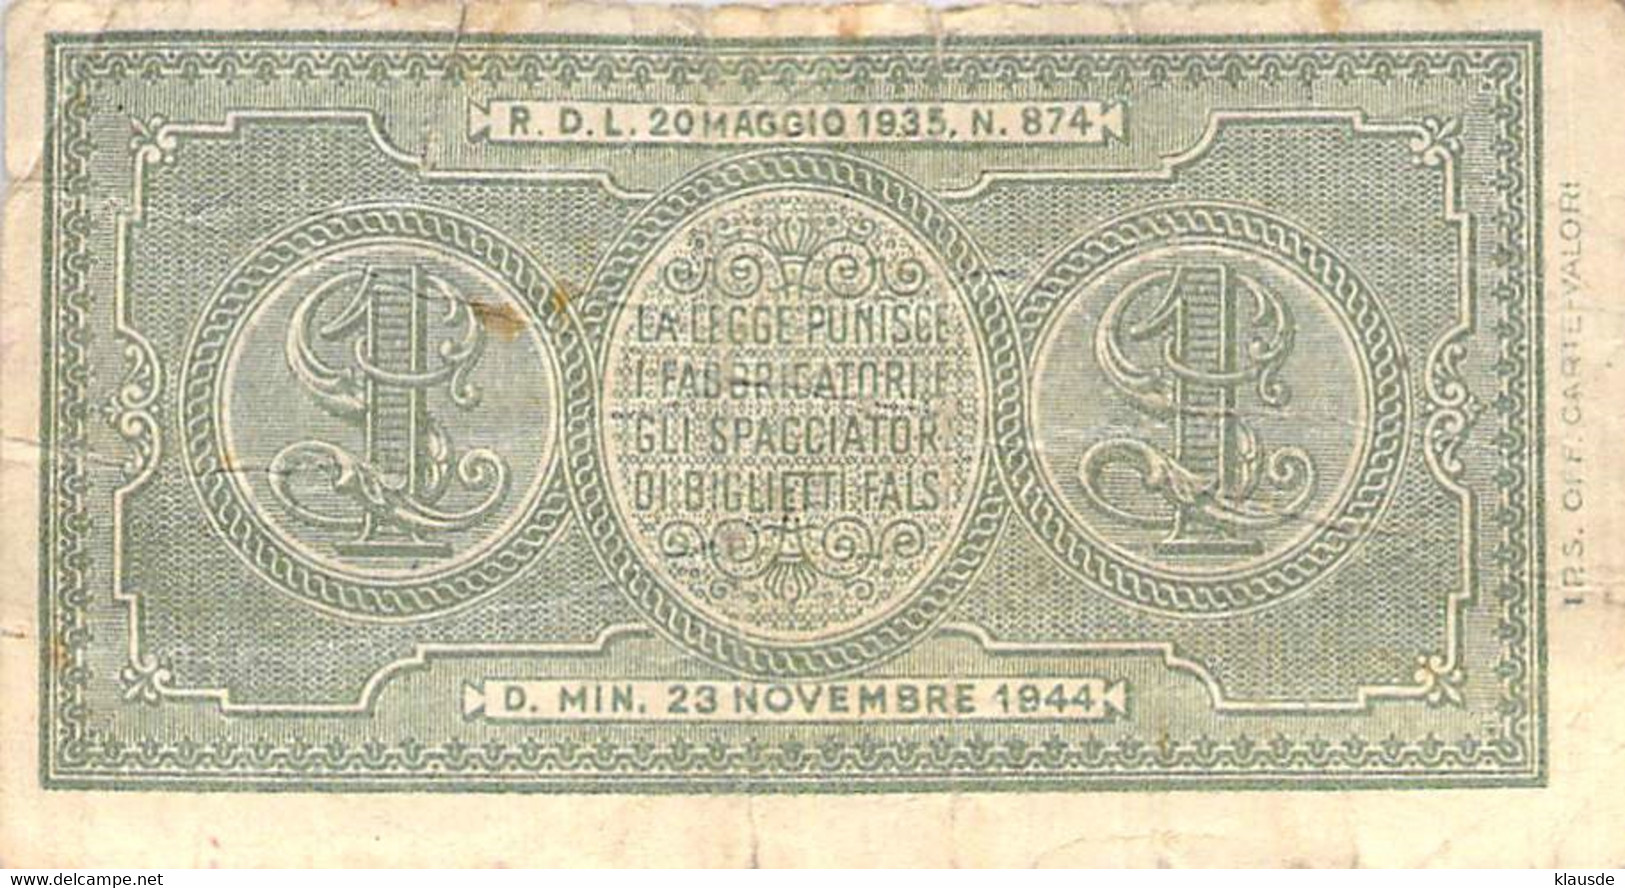 BANCONOTE BANCA D'ITALIA 1 LIRE 1944 VG/G IV - Italia – 1 Lira